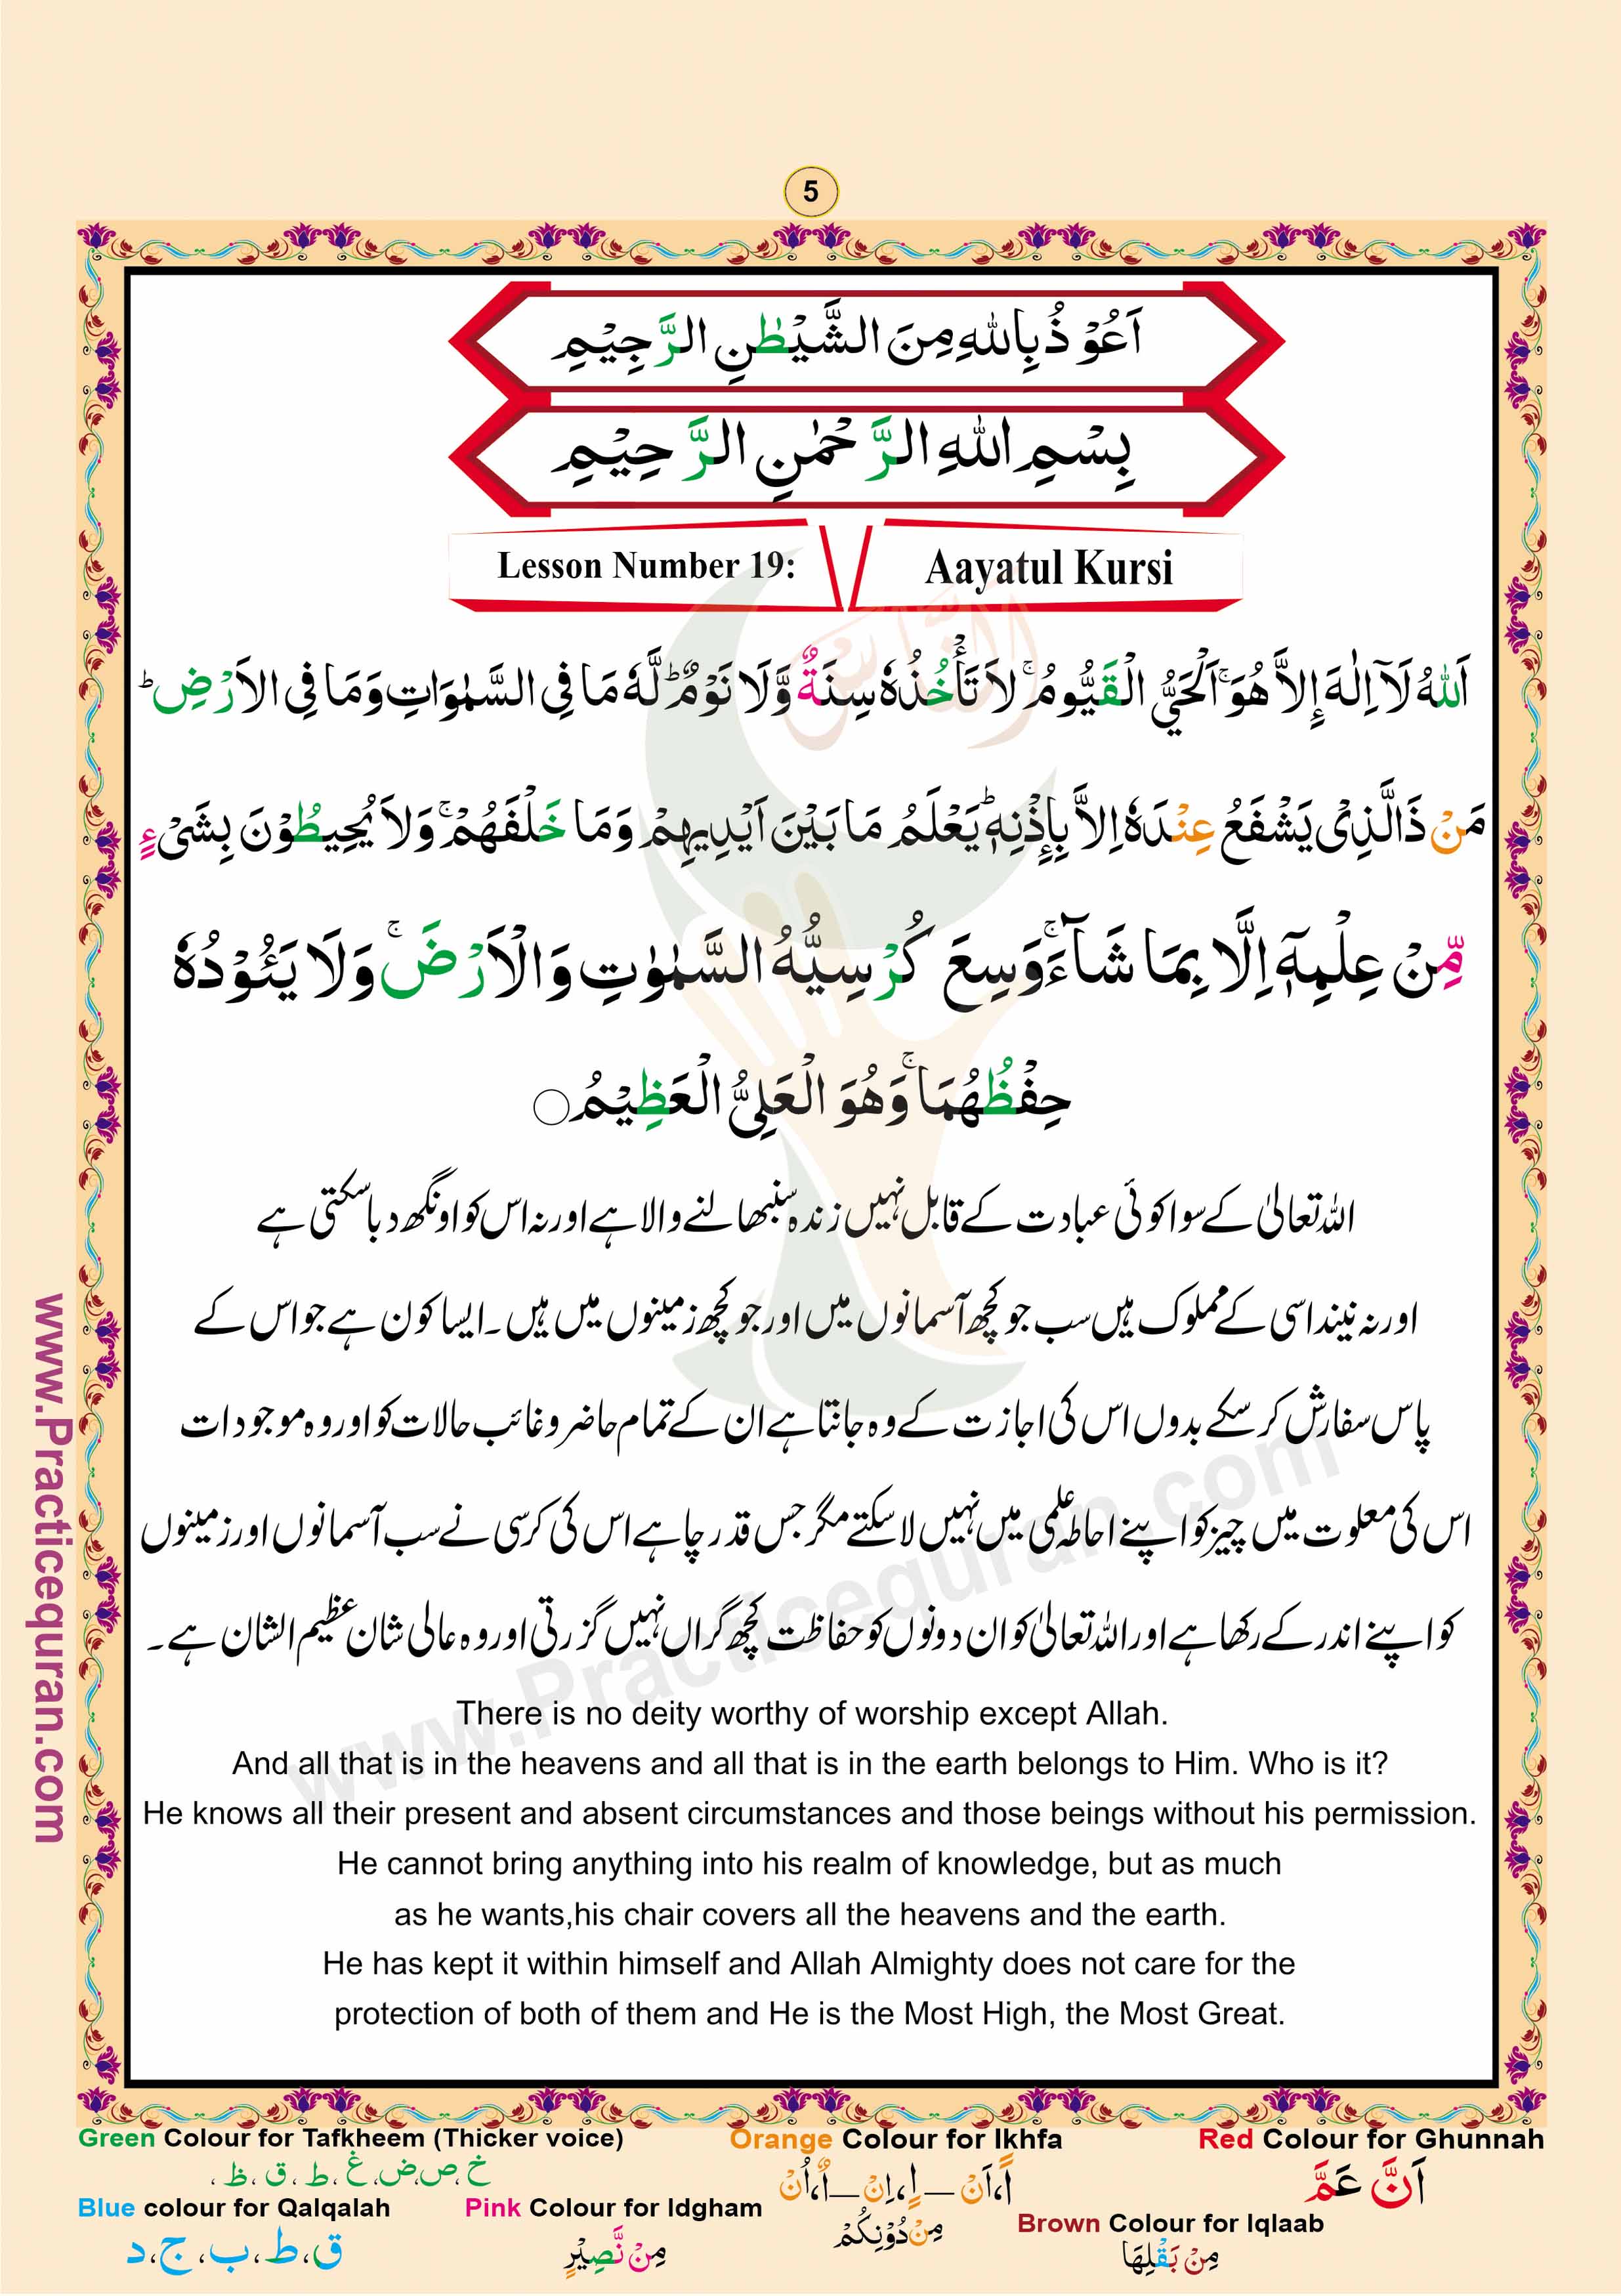 Read Namaz (Salah) Page No 5, Practice Quran